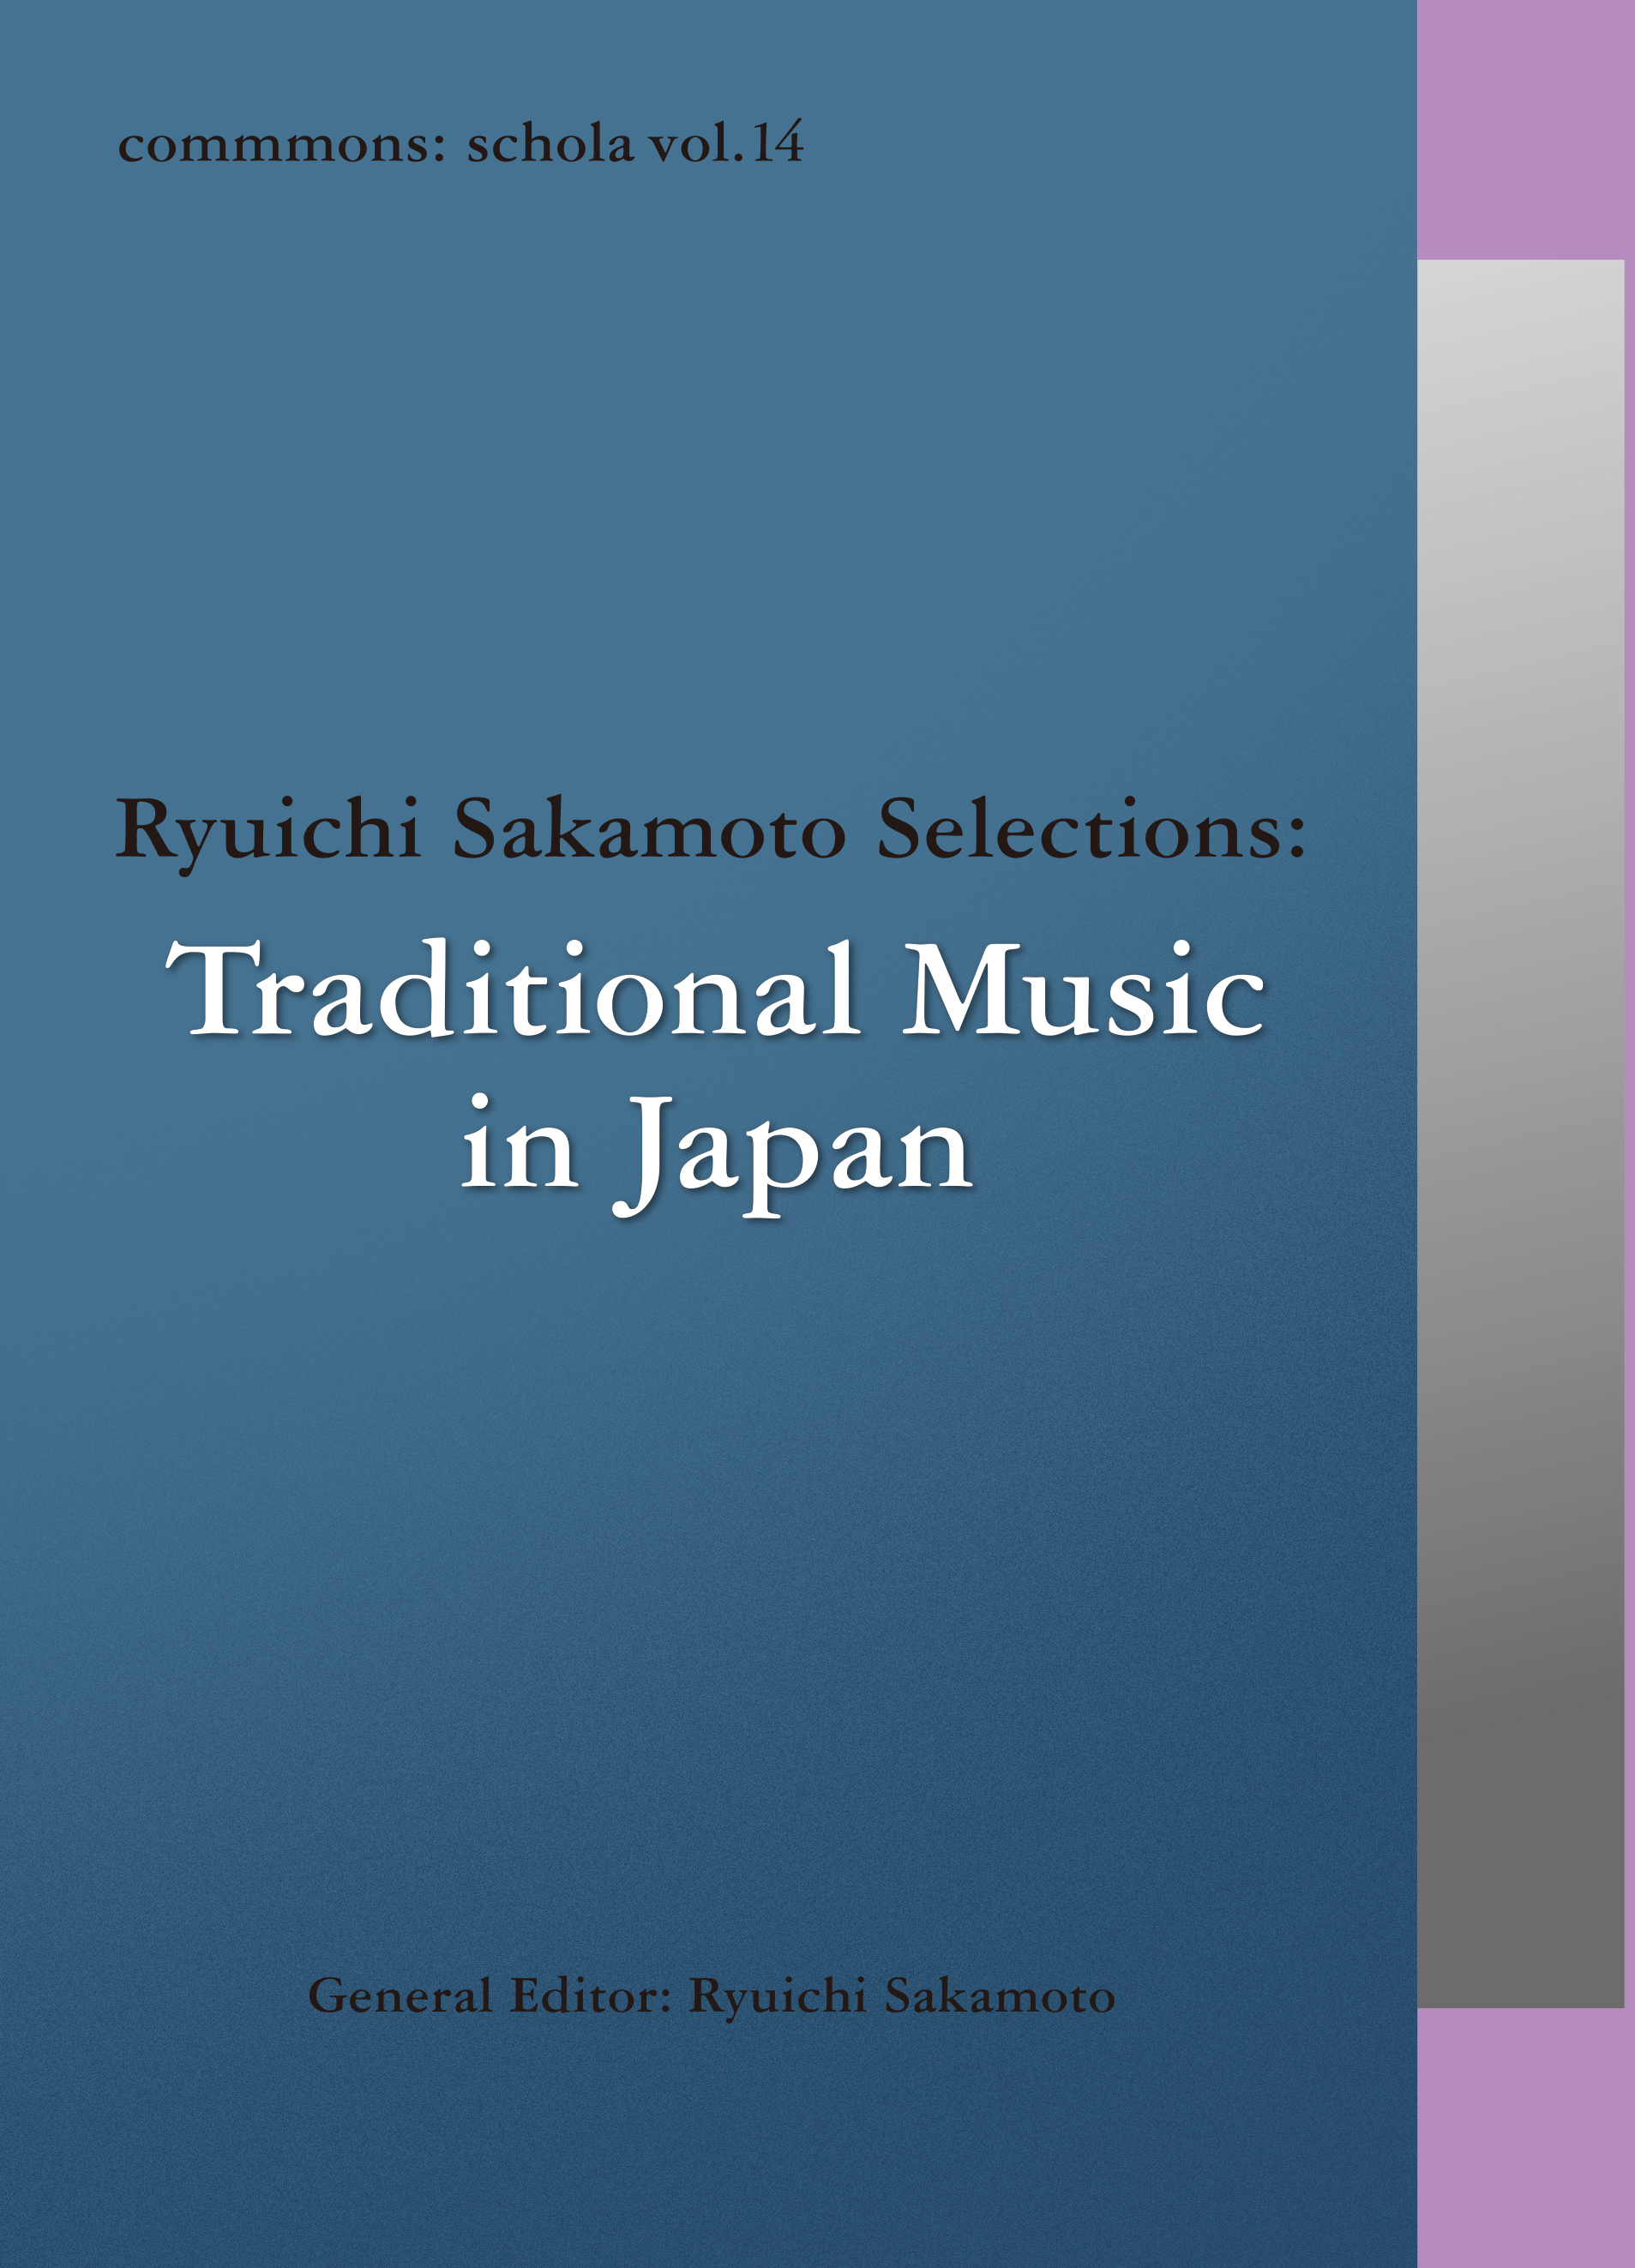 commmons: schola vol.14 Ryuichi Sakamoto Selections:Traditional